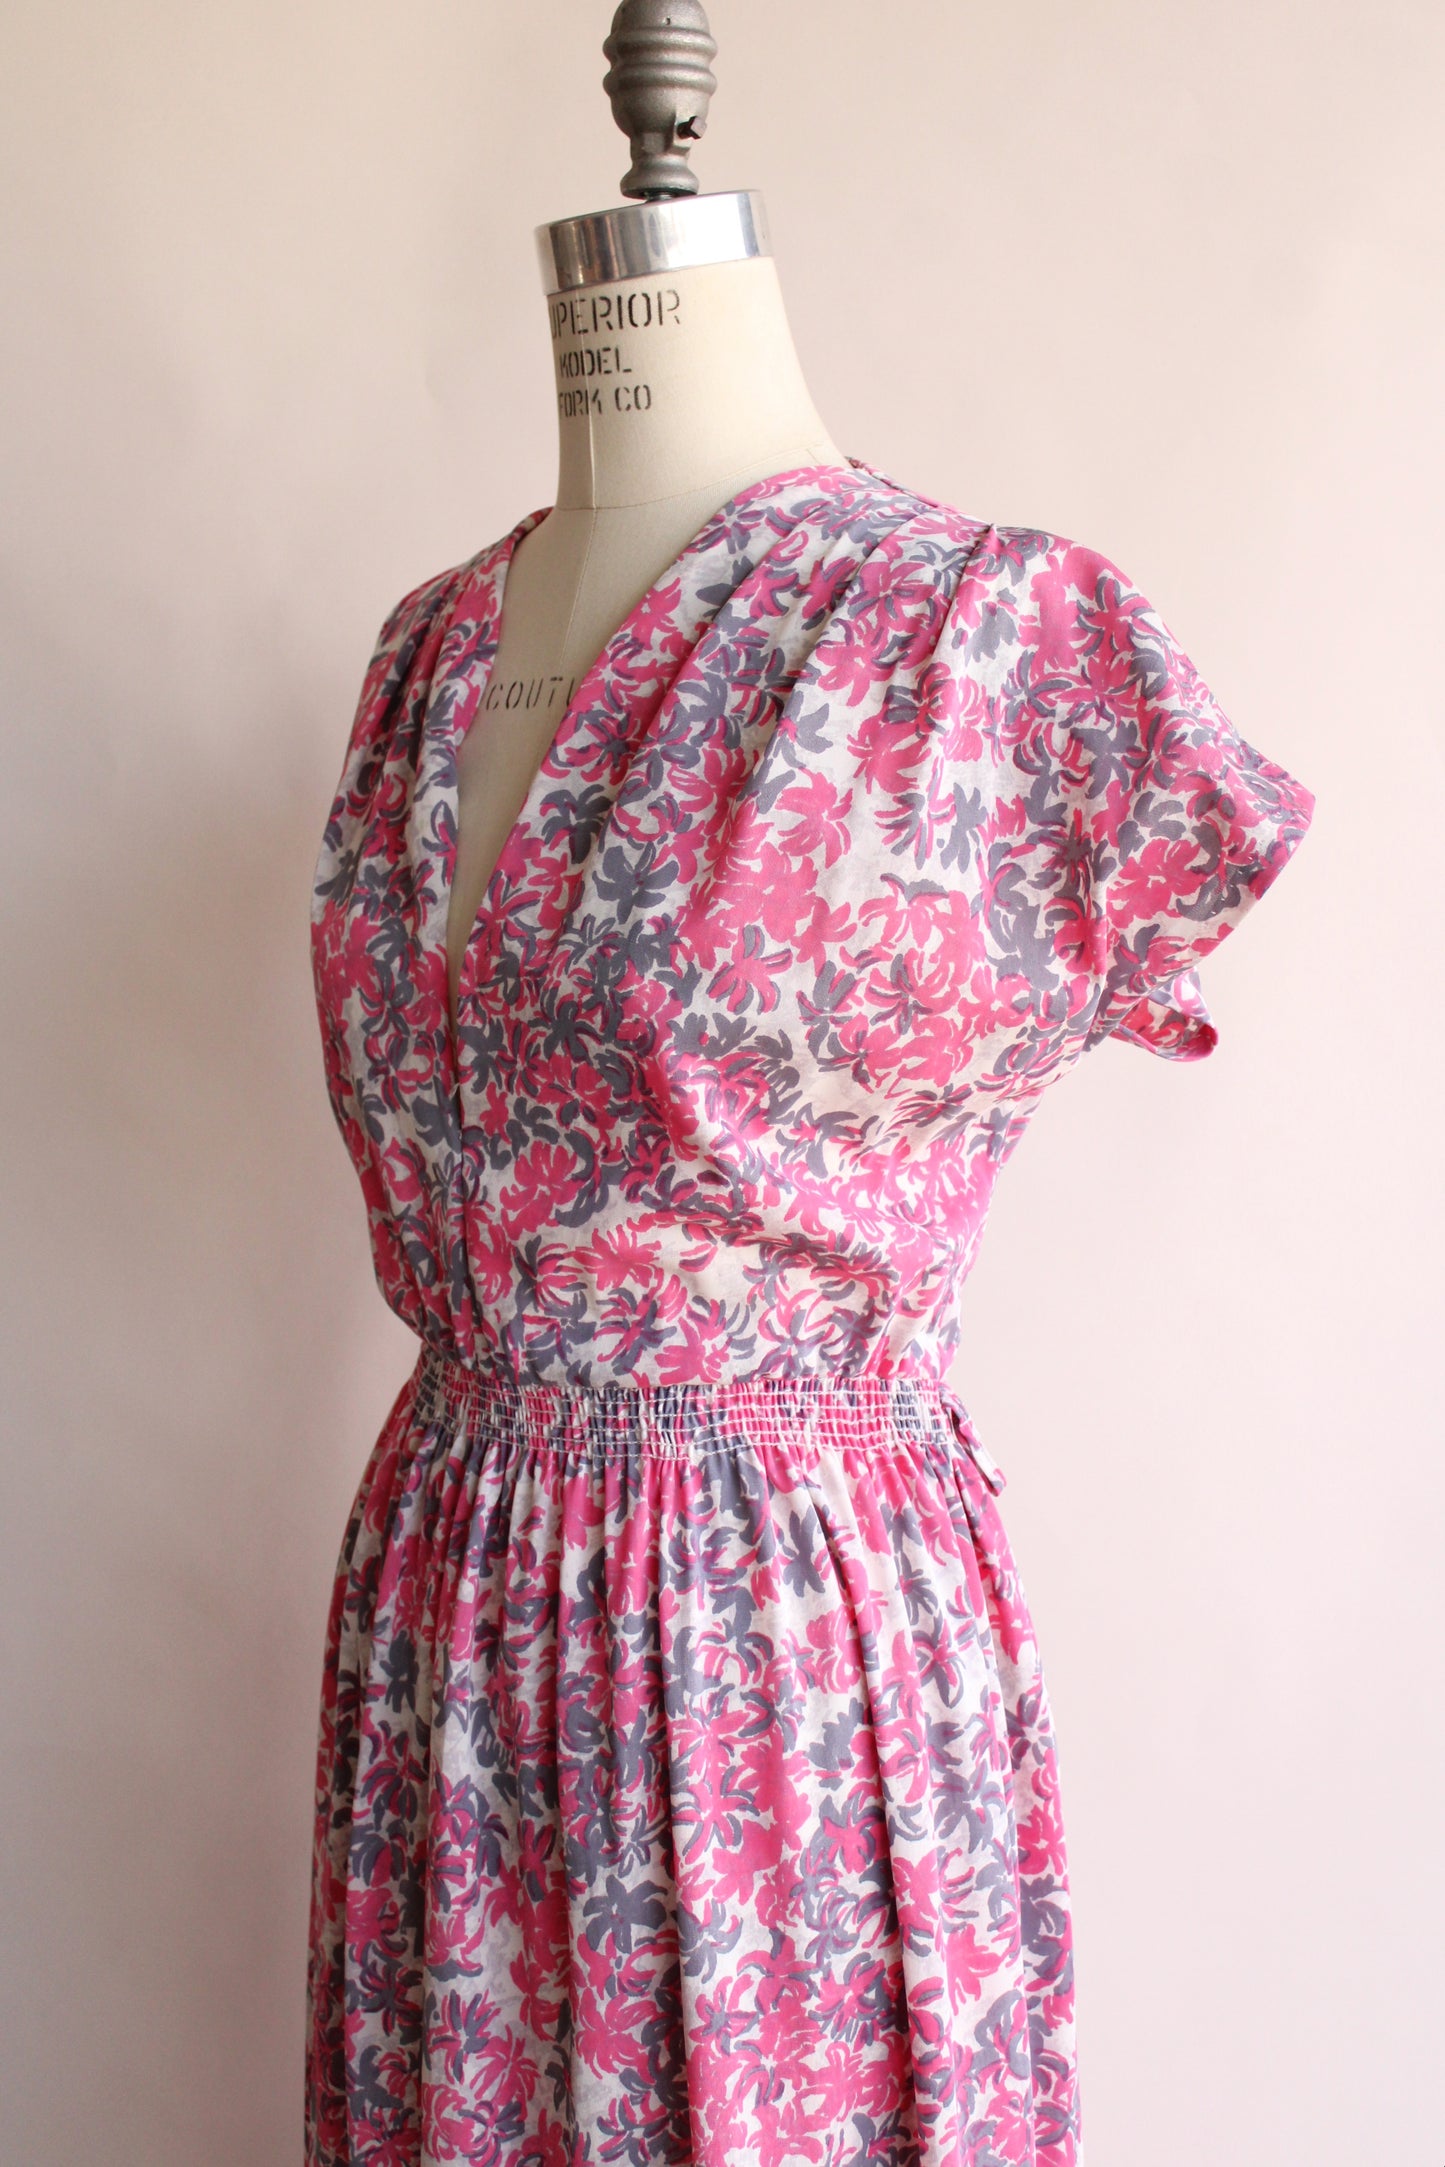 Vintage 1940s Pink and Gray Nylon Dress